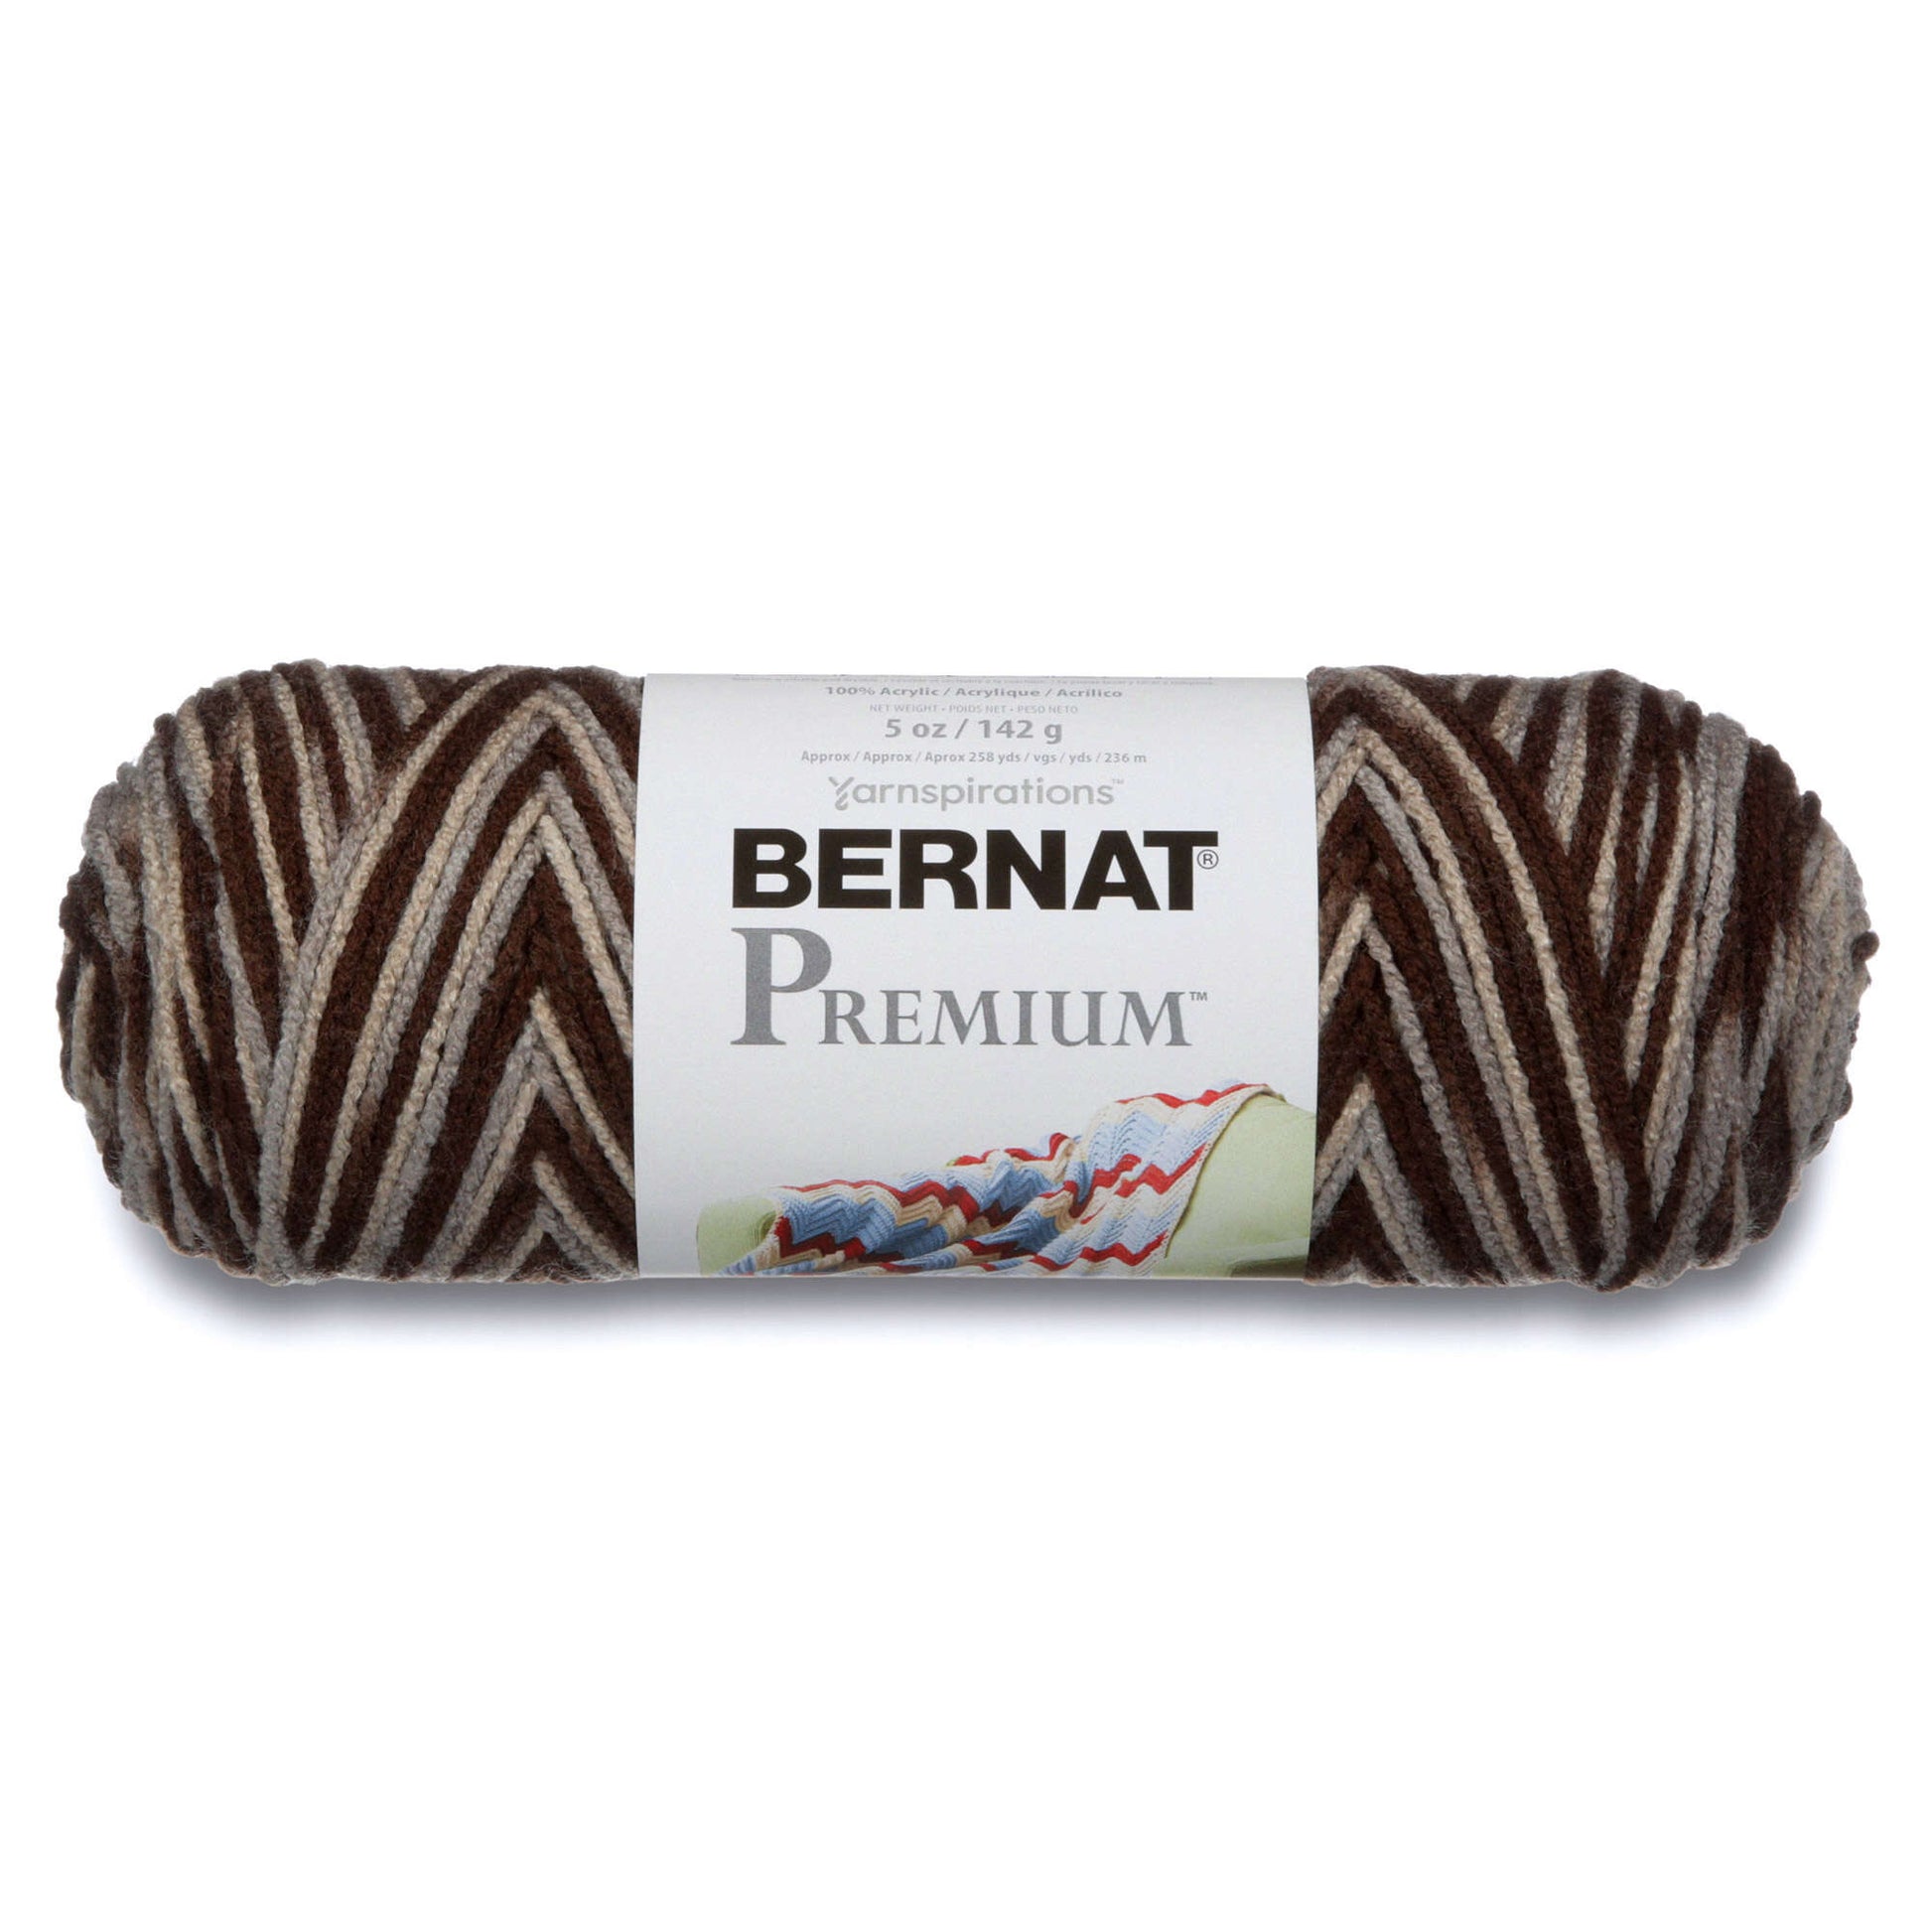 Bernat Premium Yarn - Discontinued Shades